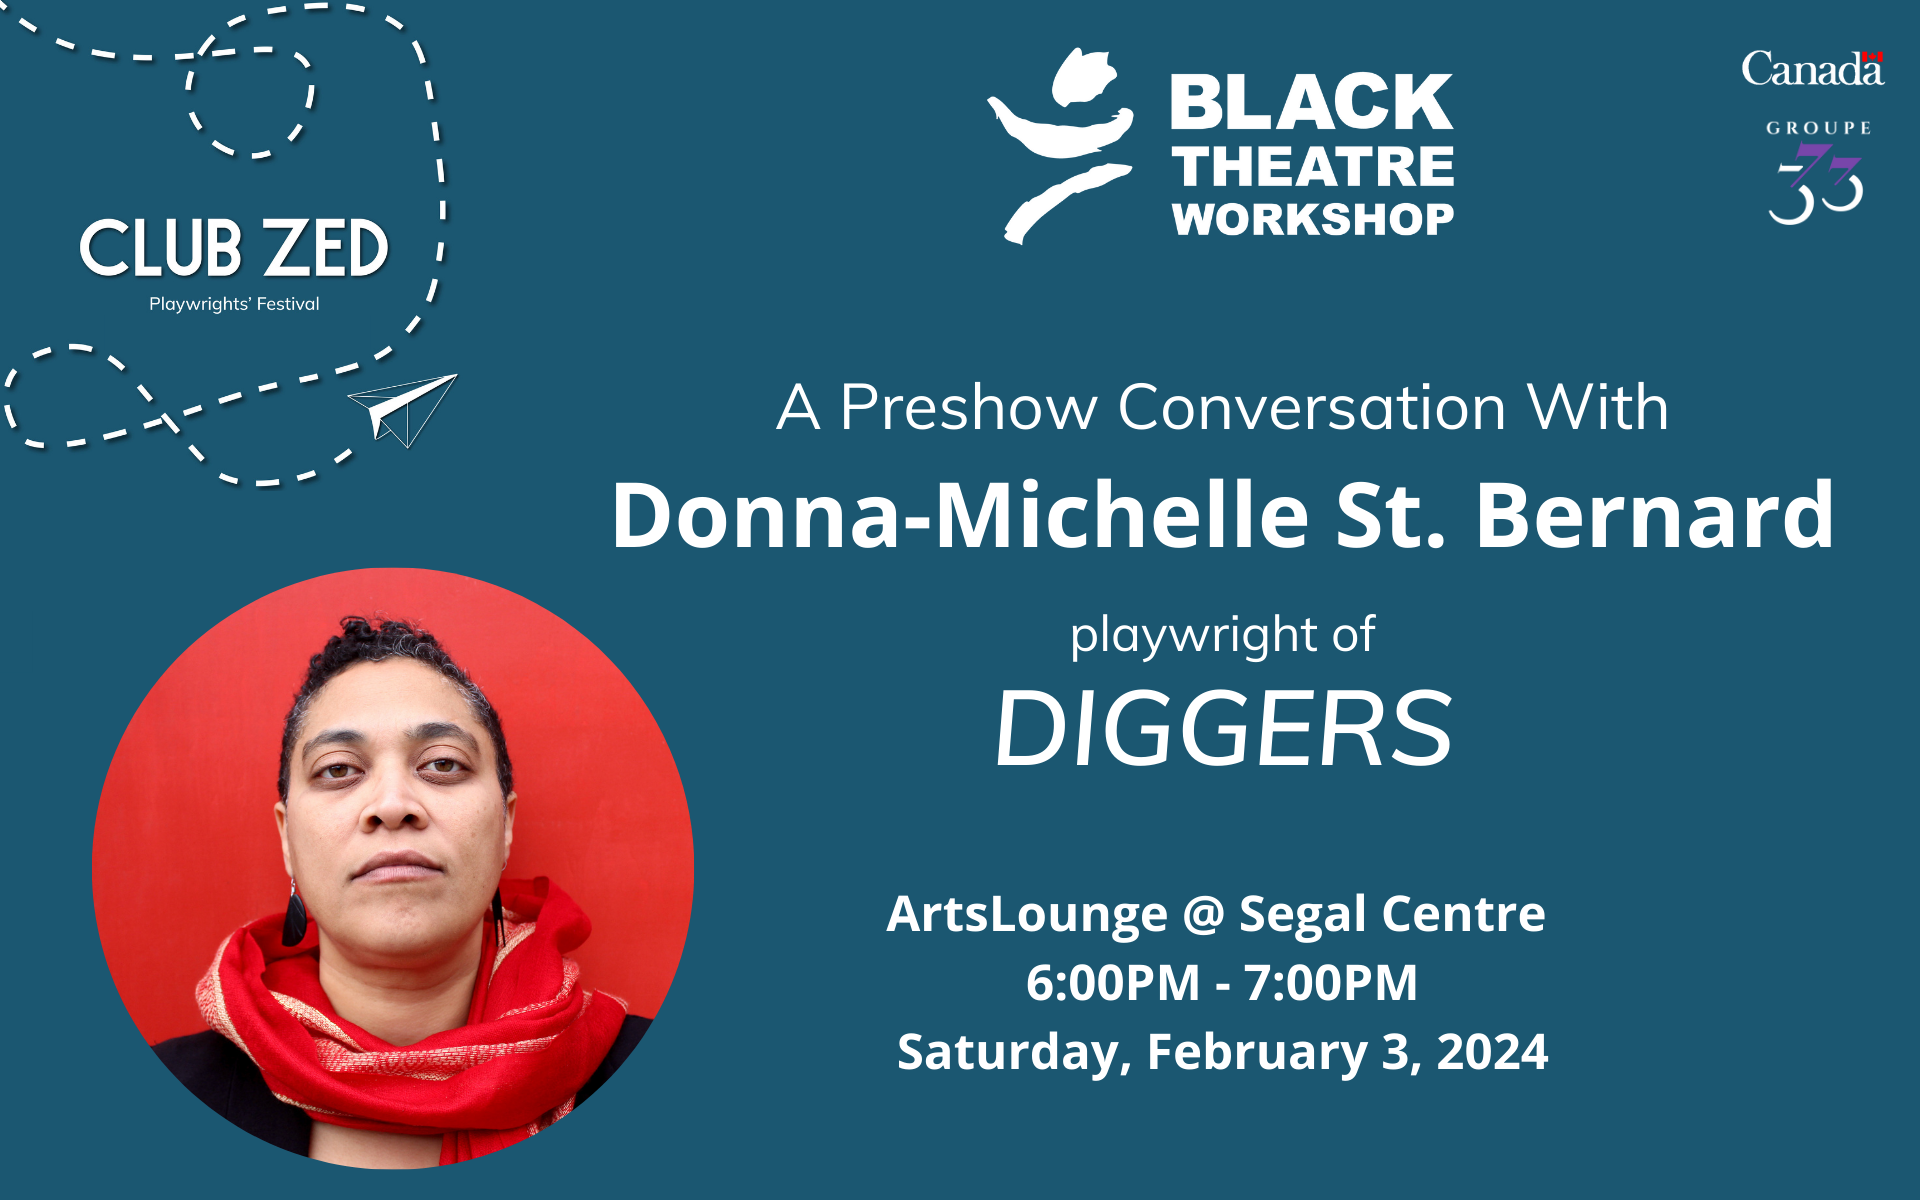 DIGGERS Preshow Conversation With Donna-Michelle St. Bernard - Black Theatre Workshop